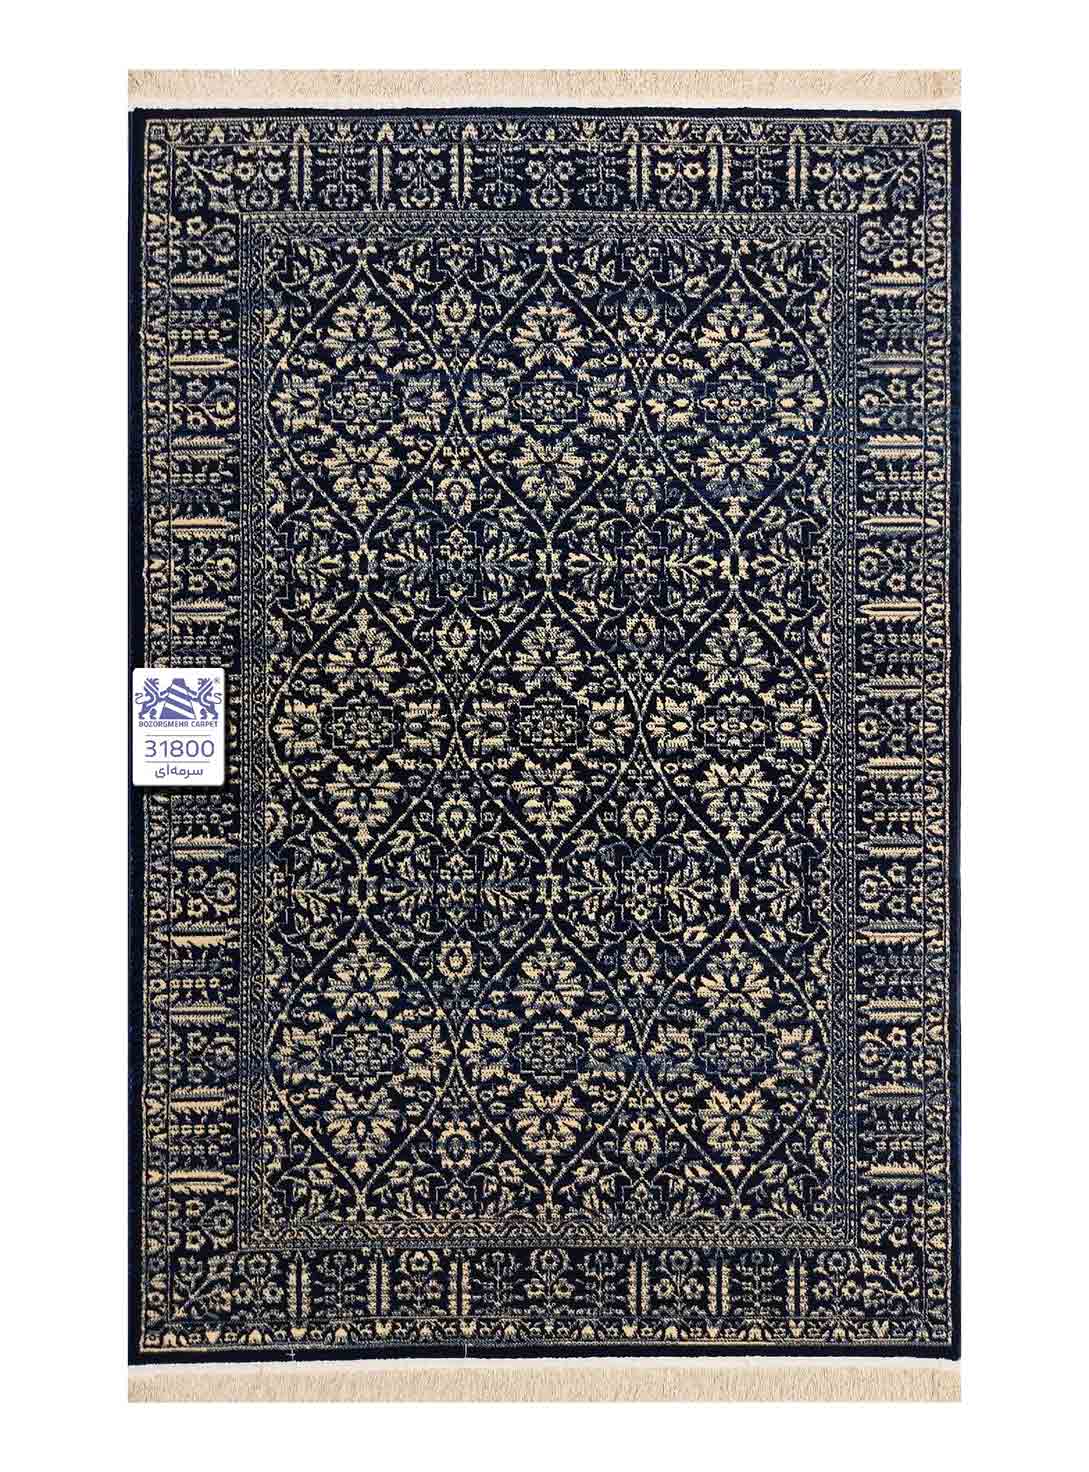 Persian transitional machine-made carpet 31800